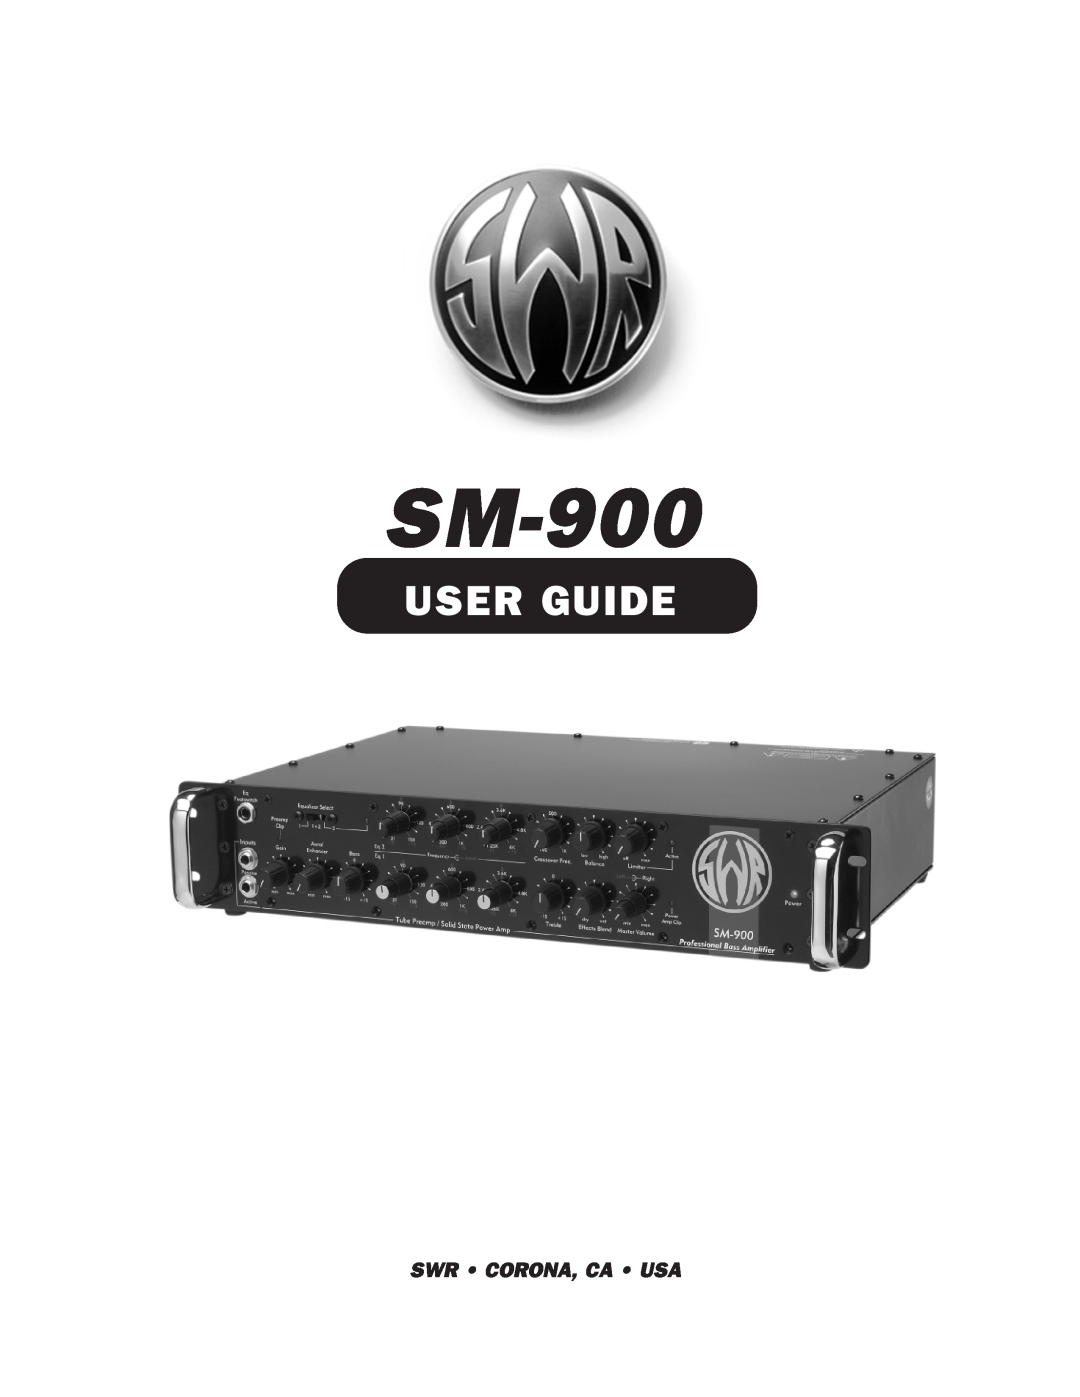 SWR Sound SM-900 manual User Guide, Swr Corona, Ca Usa 